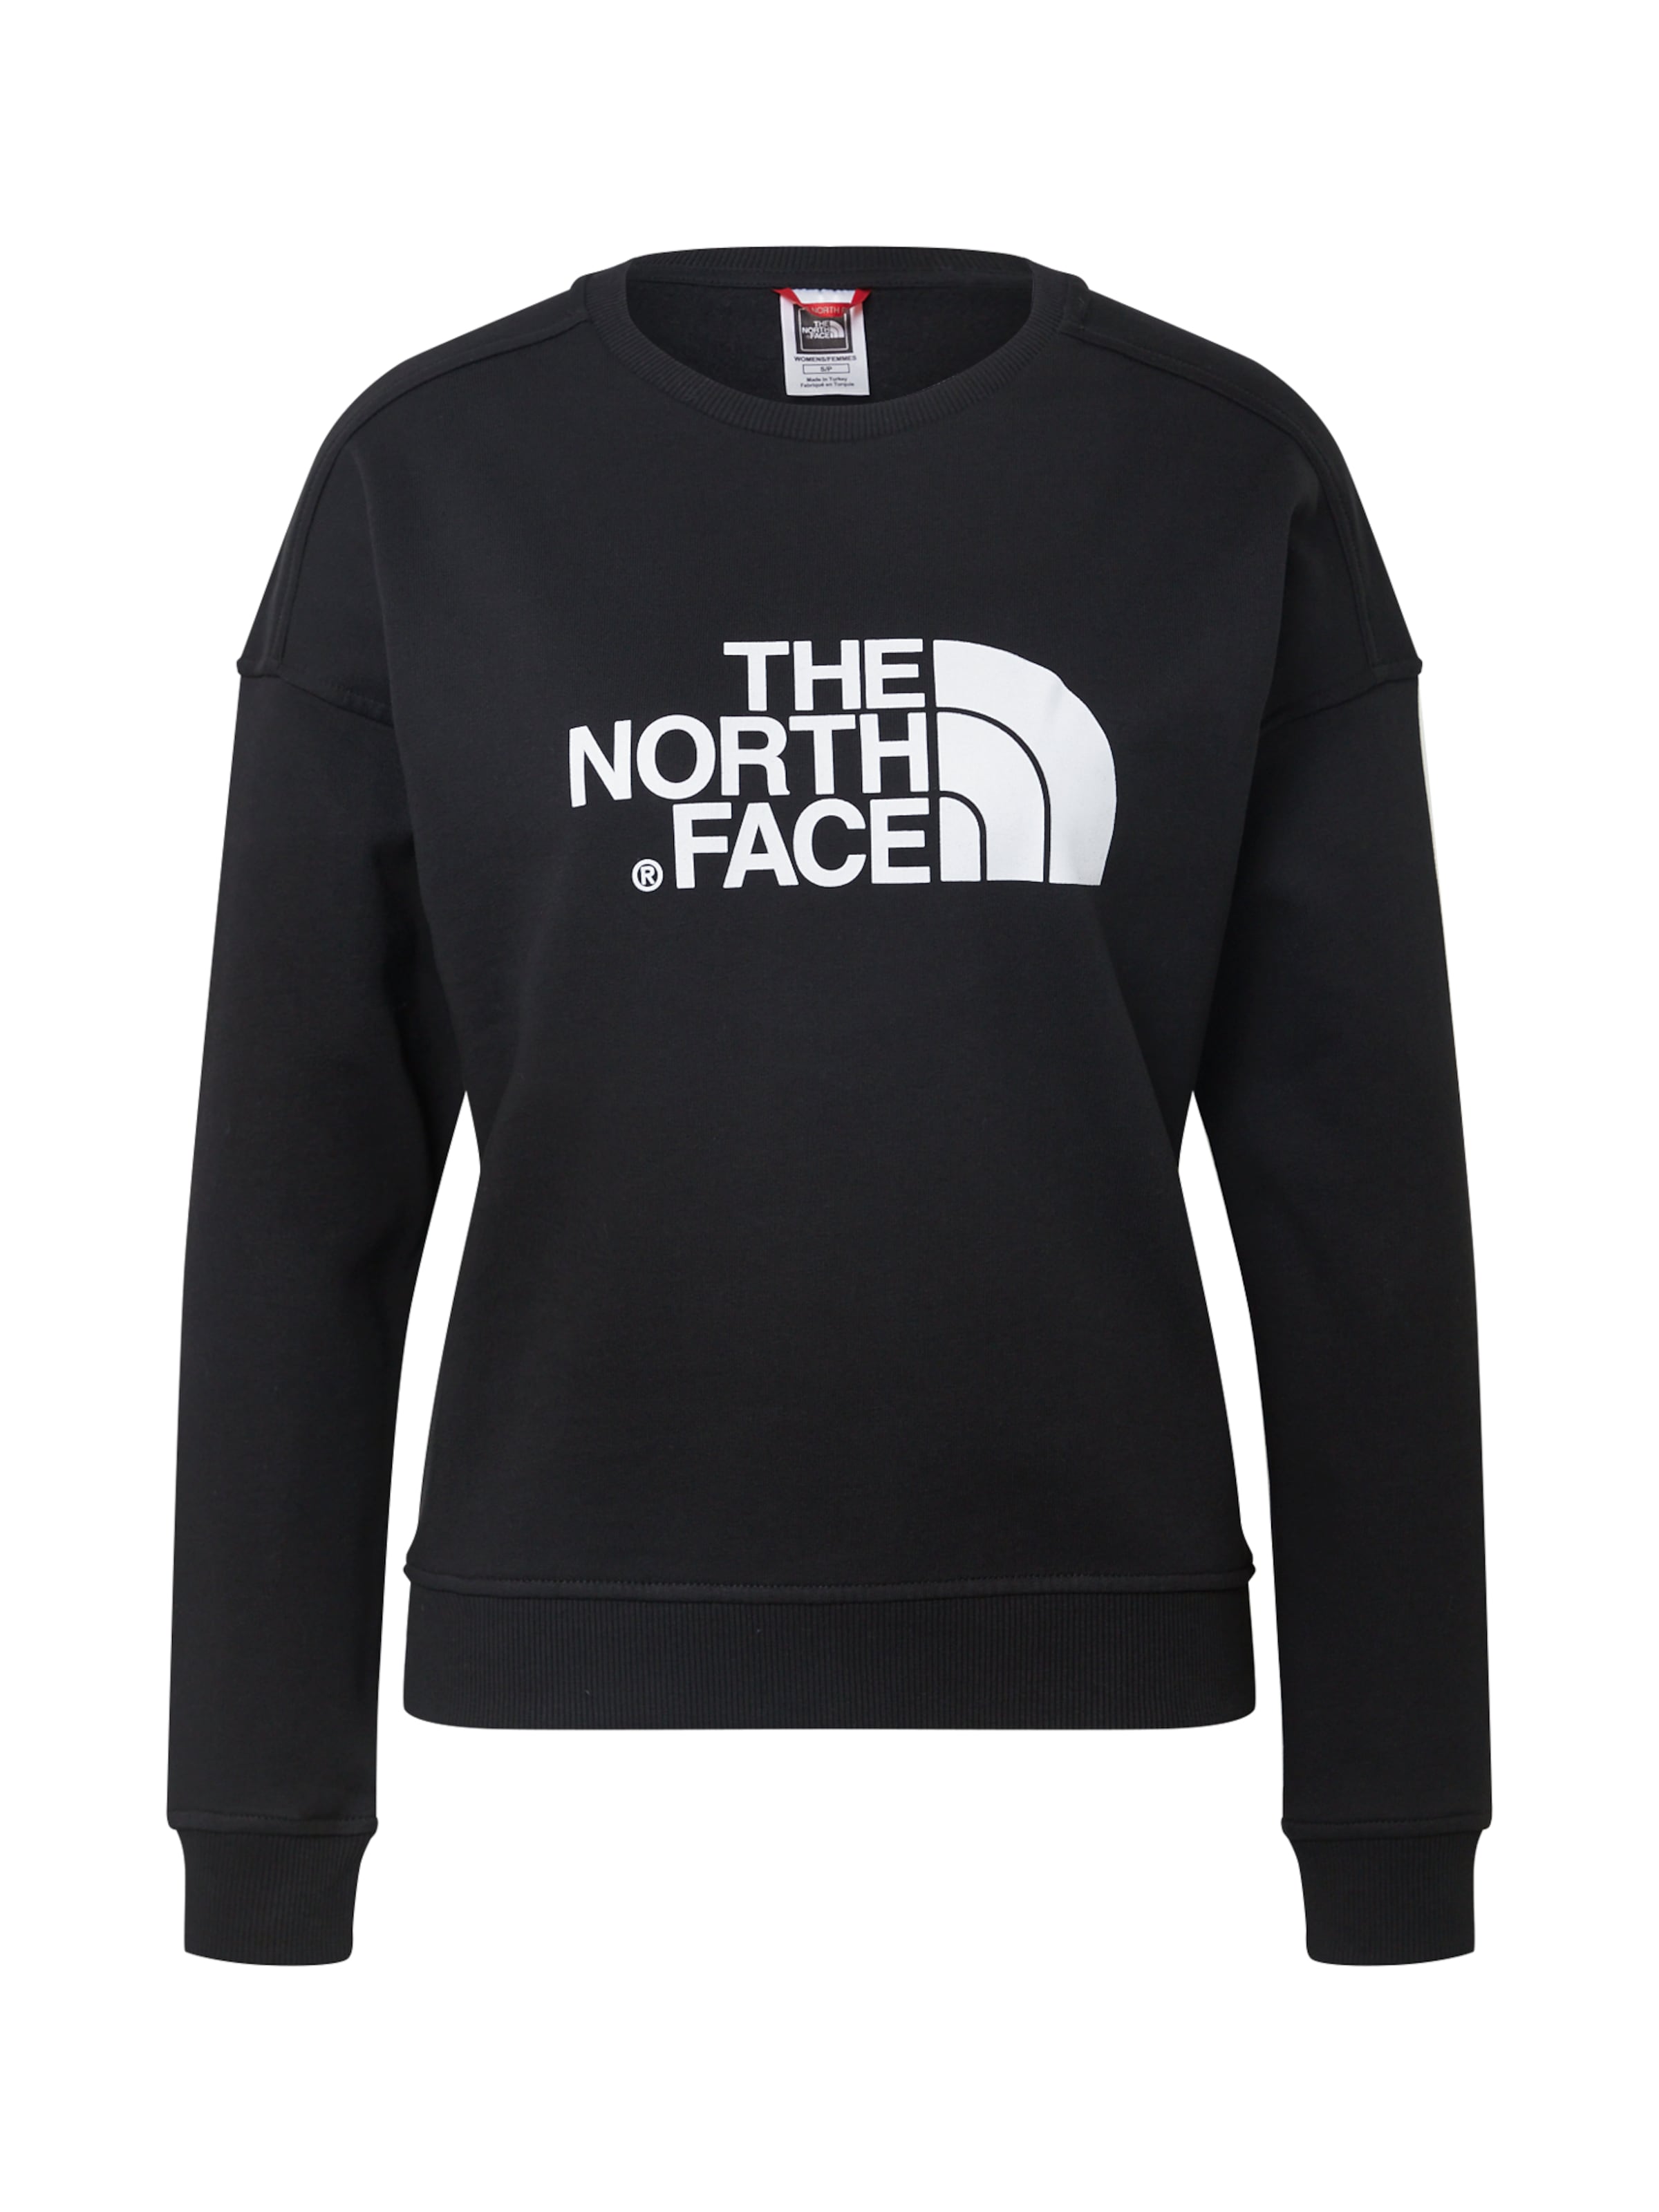 Femme Sweat-shirt 'Drew Peak' THE NORTH FACE en Noir 